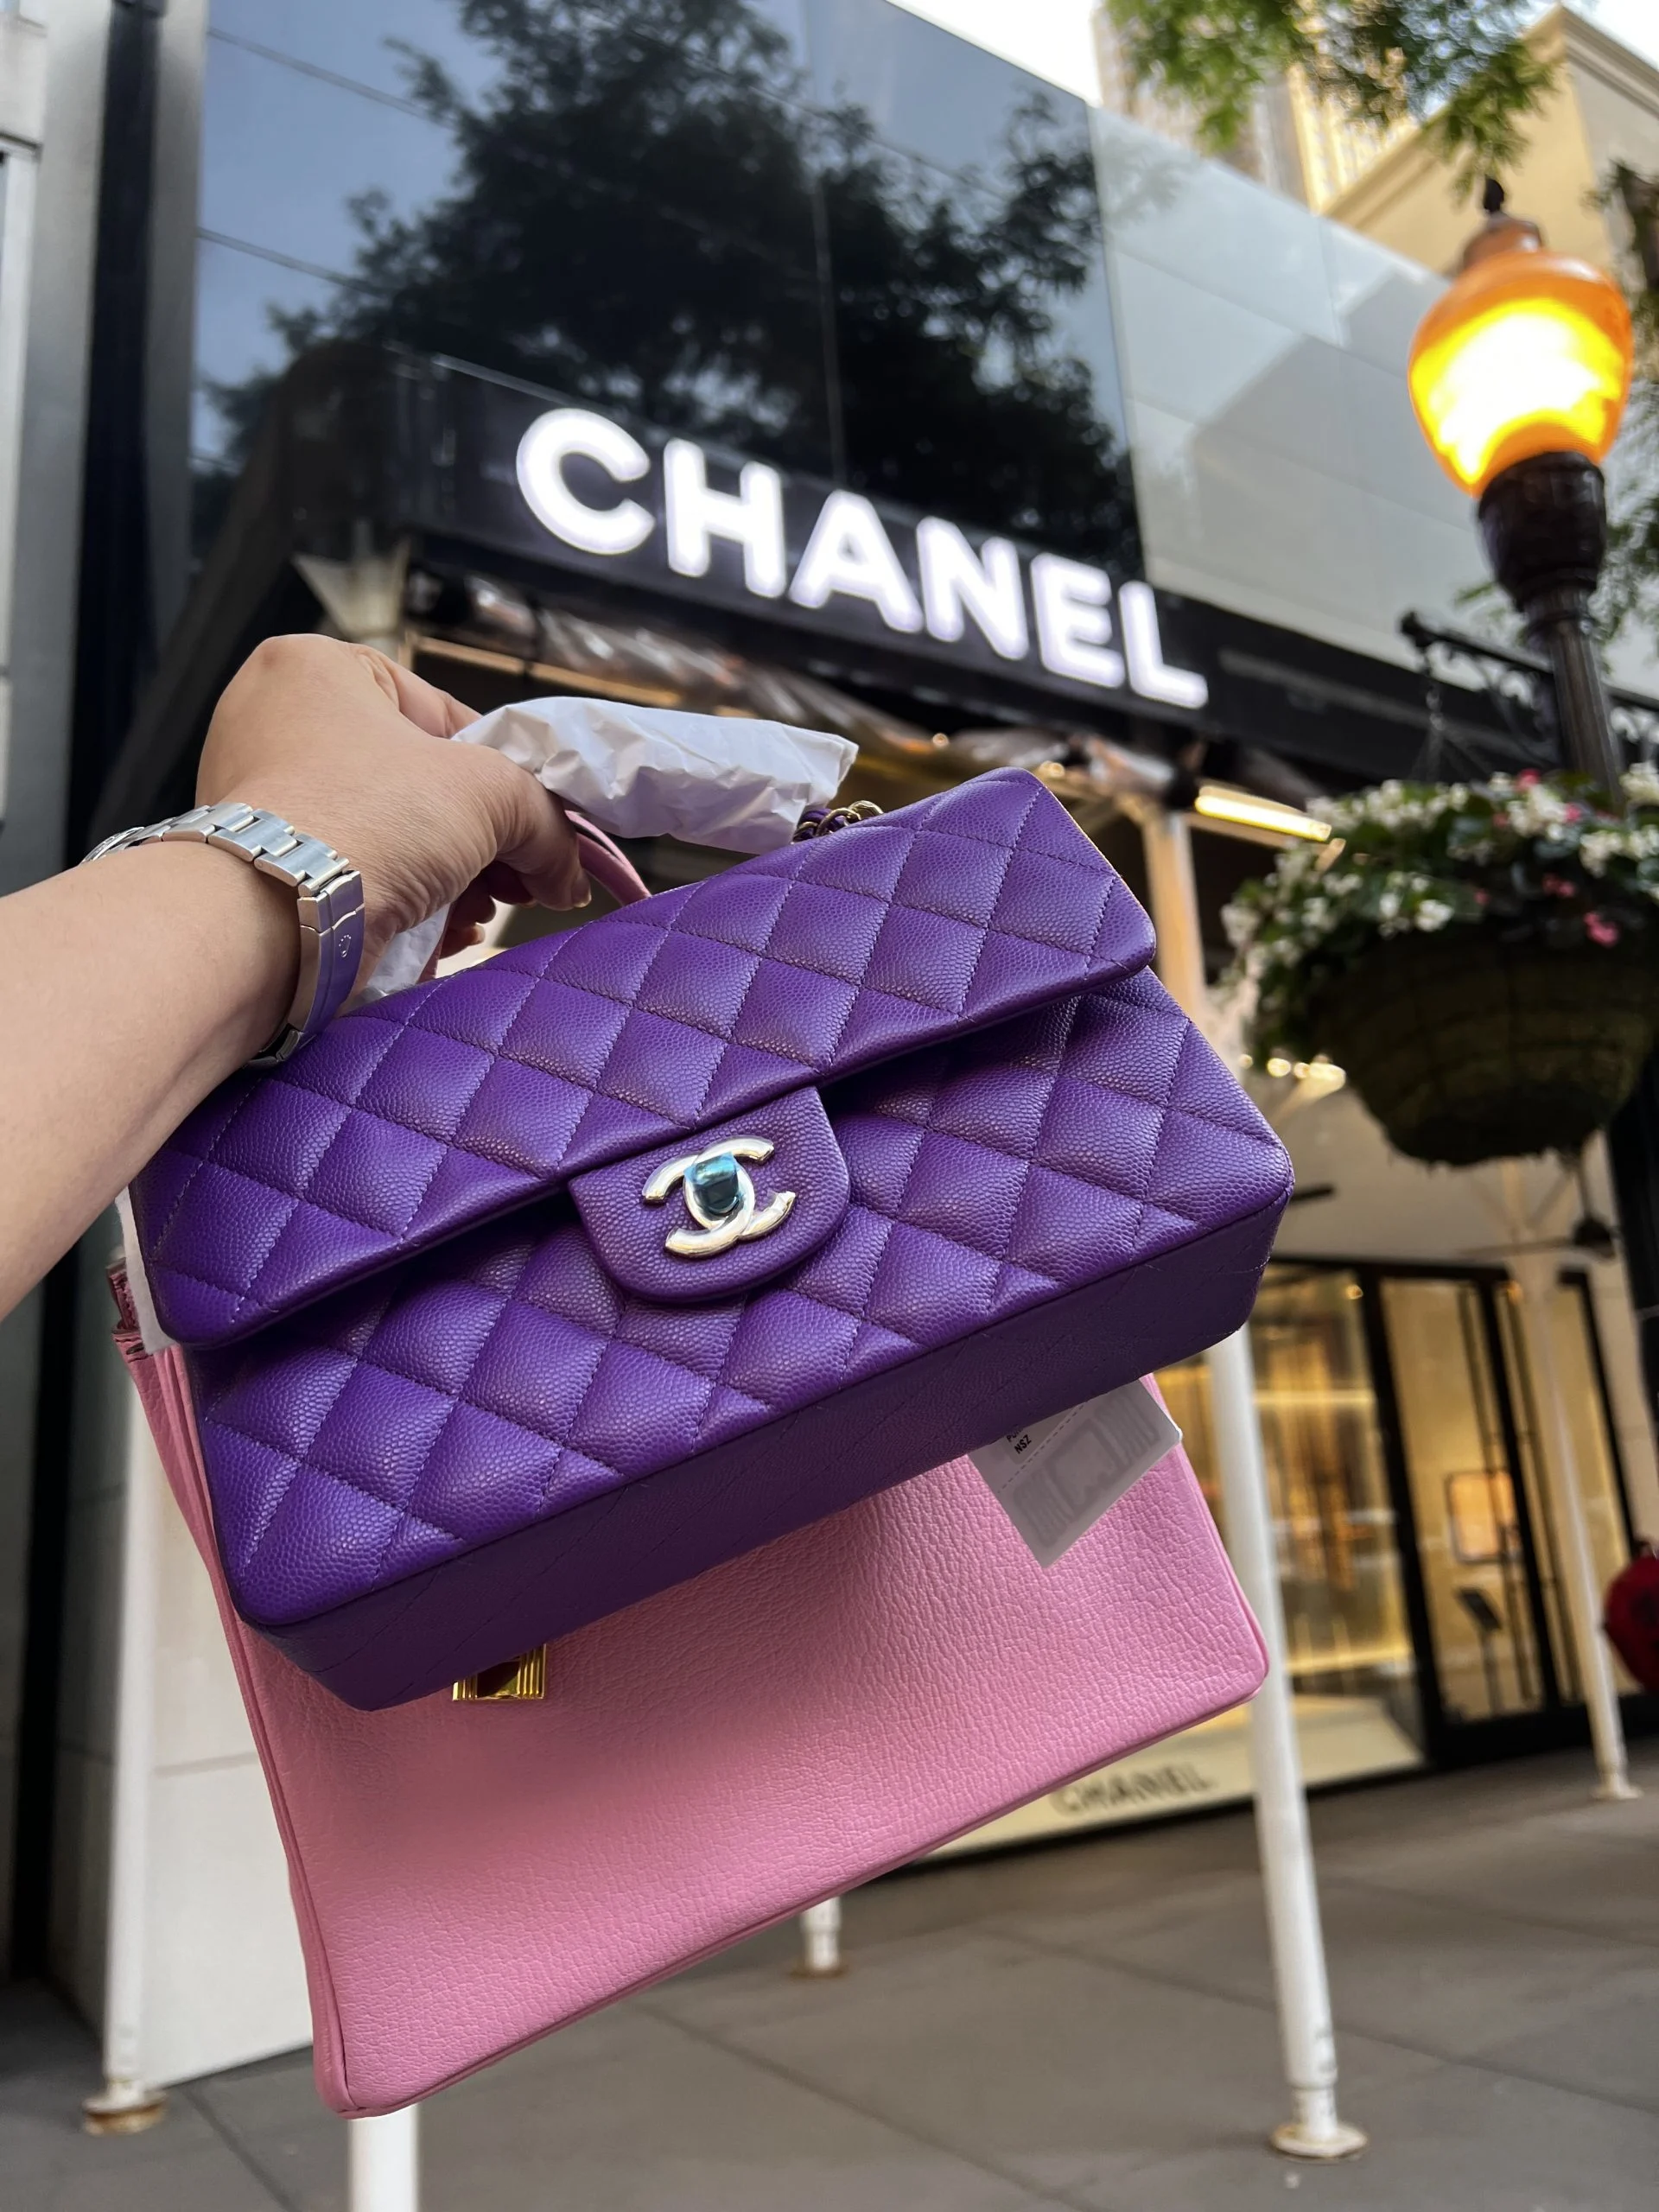 Chanel Bag Price Increase 2020 - UK EU and US - Handbagholic